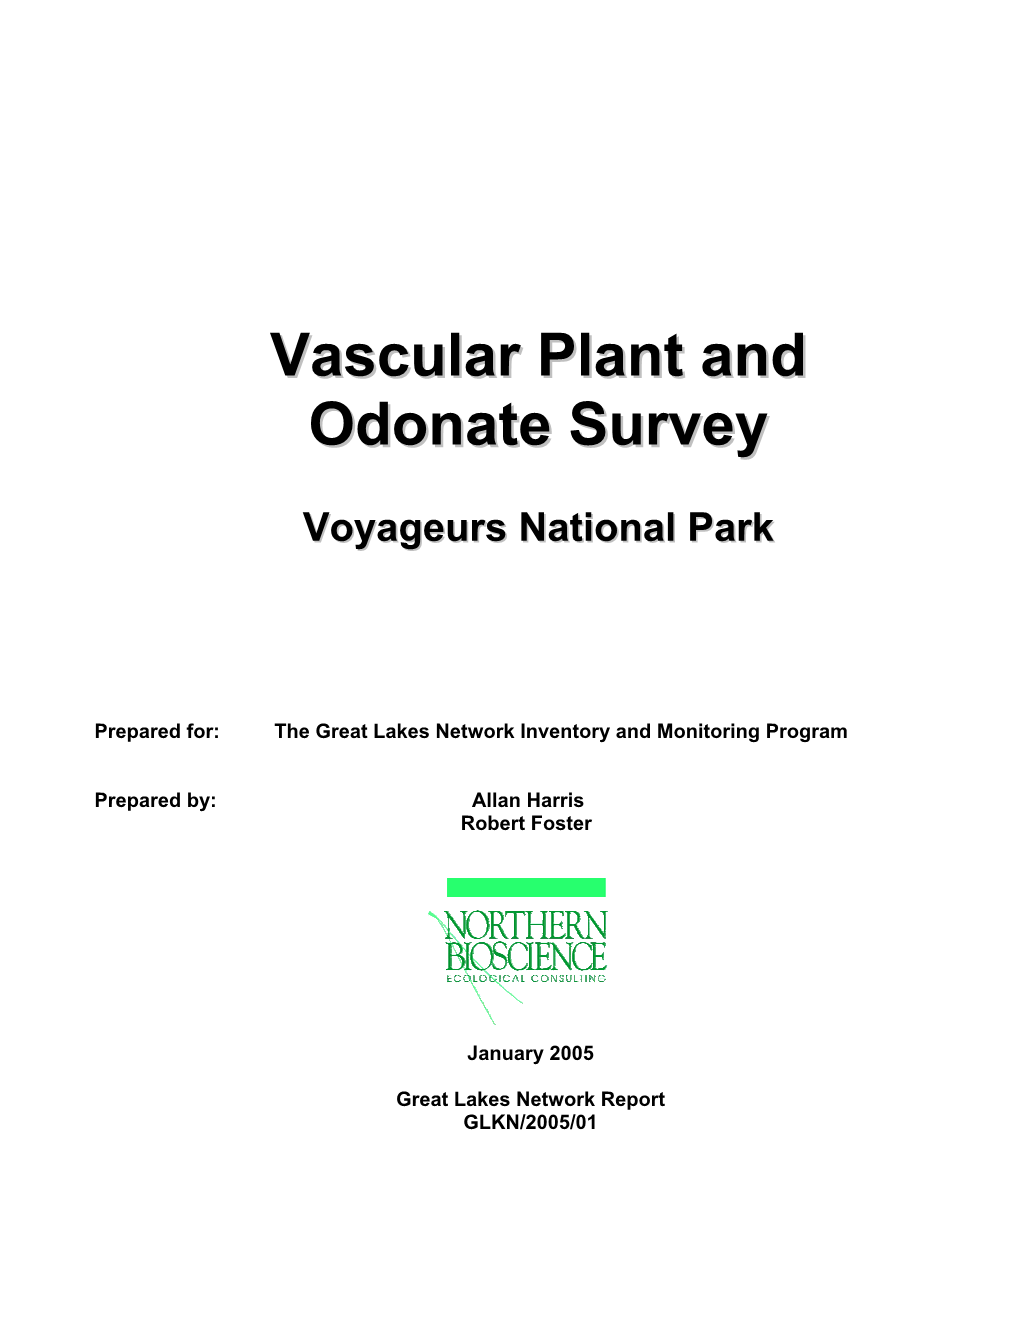 Vascular Plant and Odonate Survey Odonat E Survey